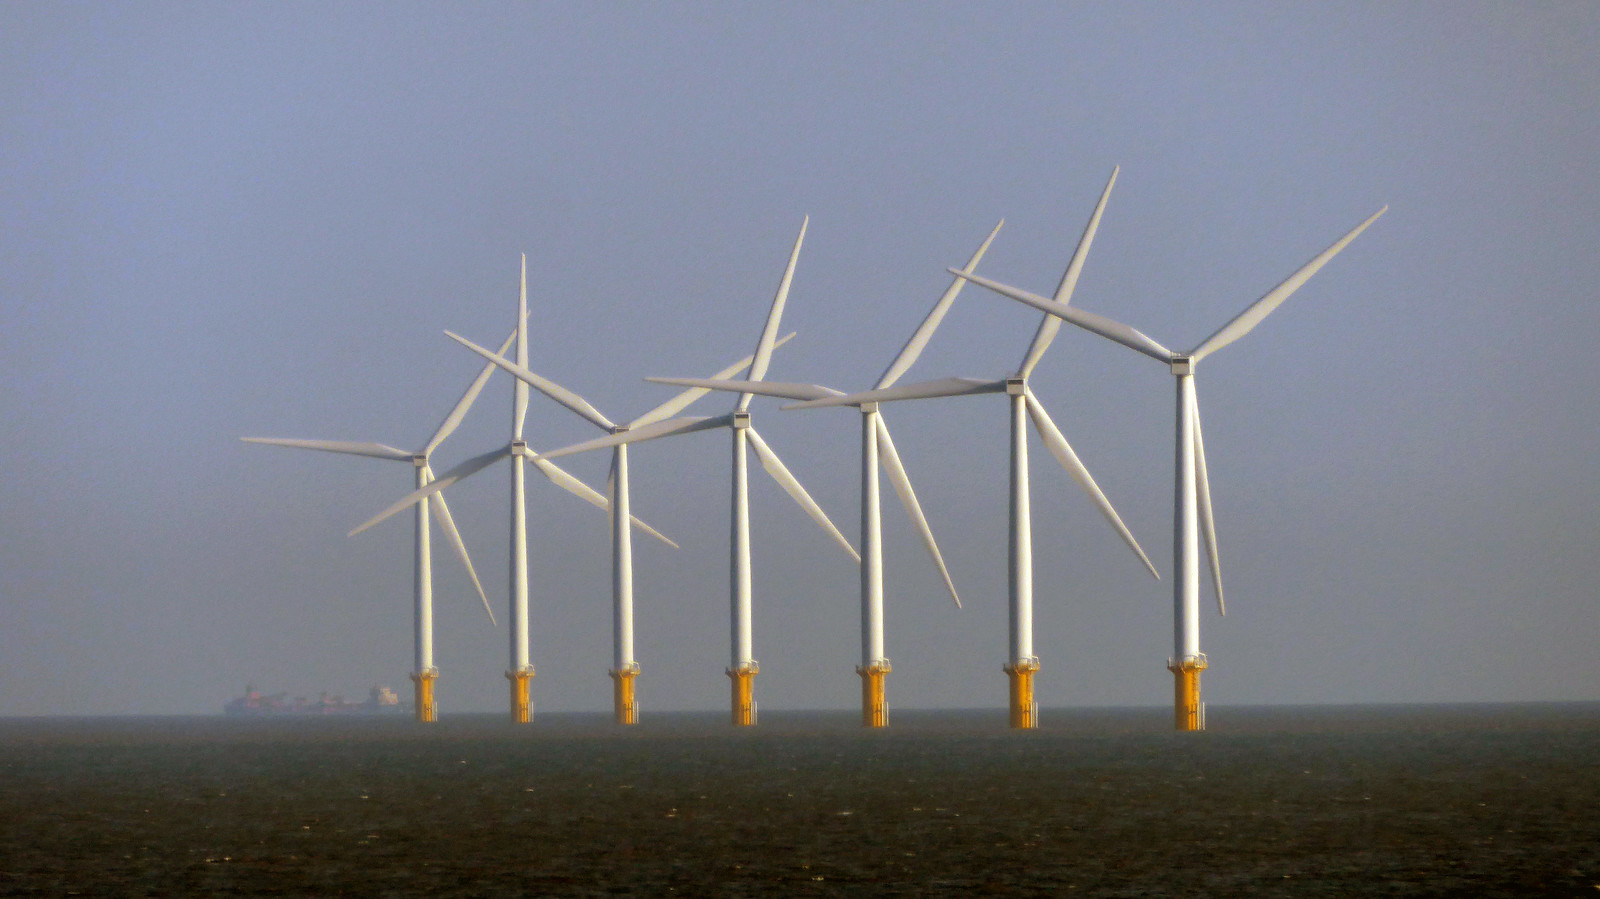 Sea wind farms